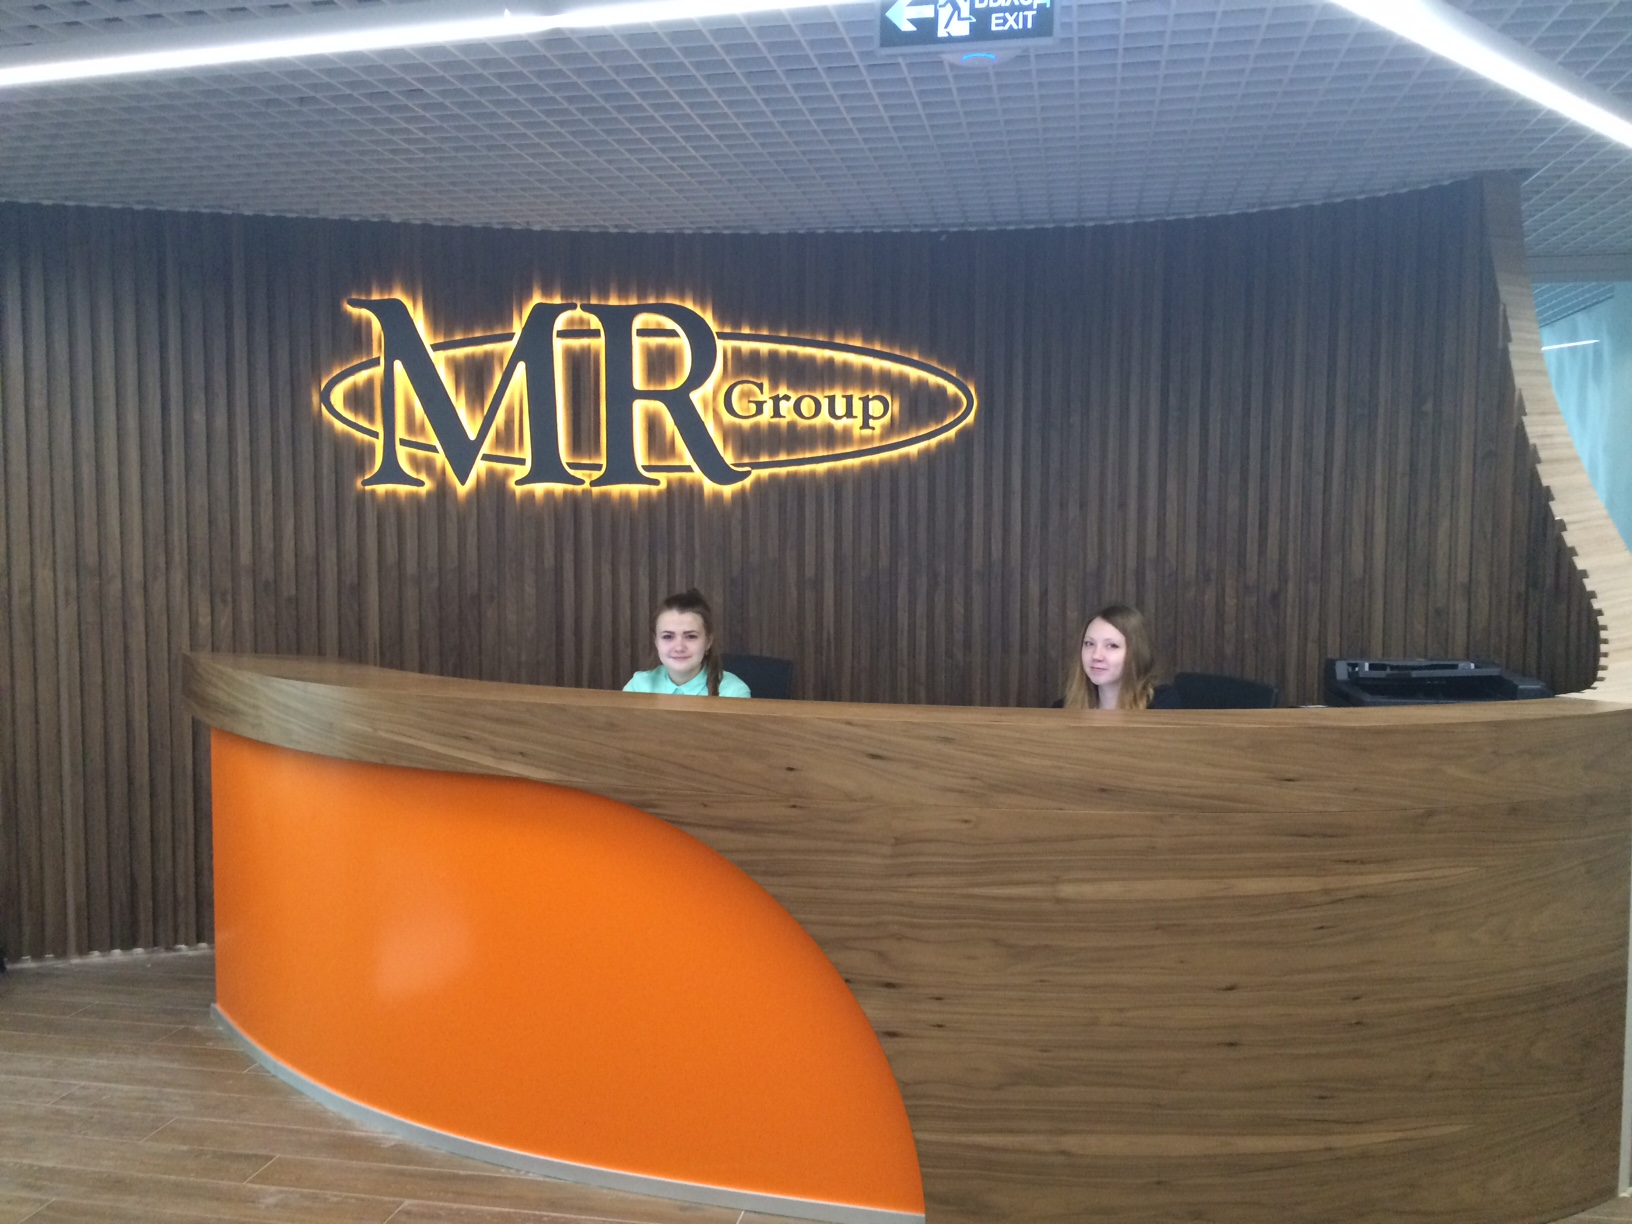 Ситизен мр групп. Mr Group офис. Mr Group застройщик Москва. Mr Group логотип. МР групп логотип новый.